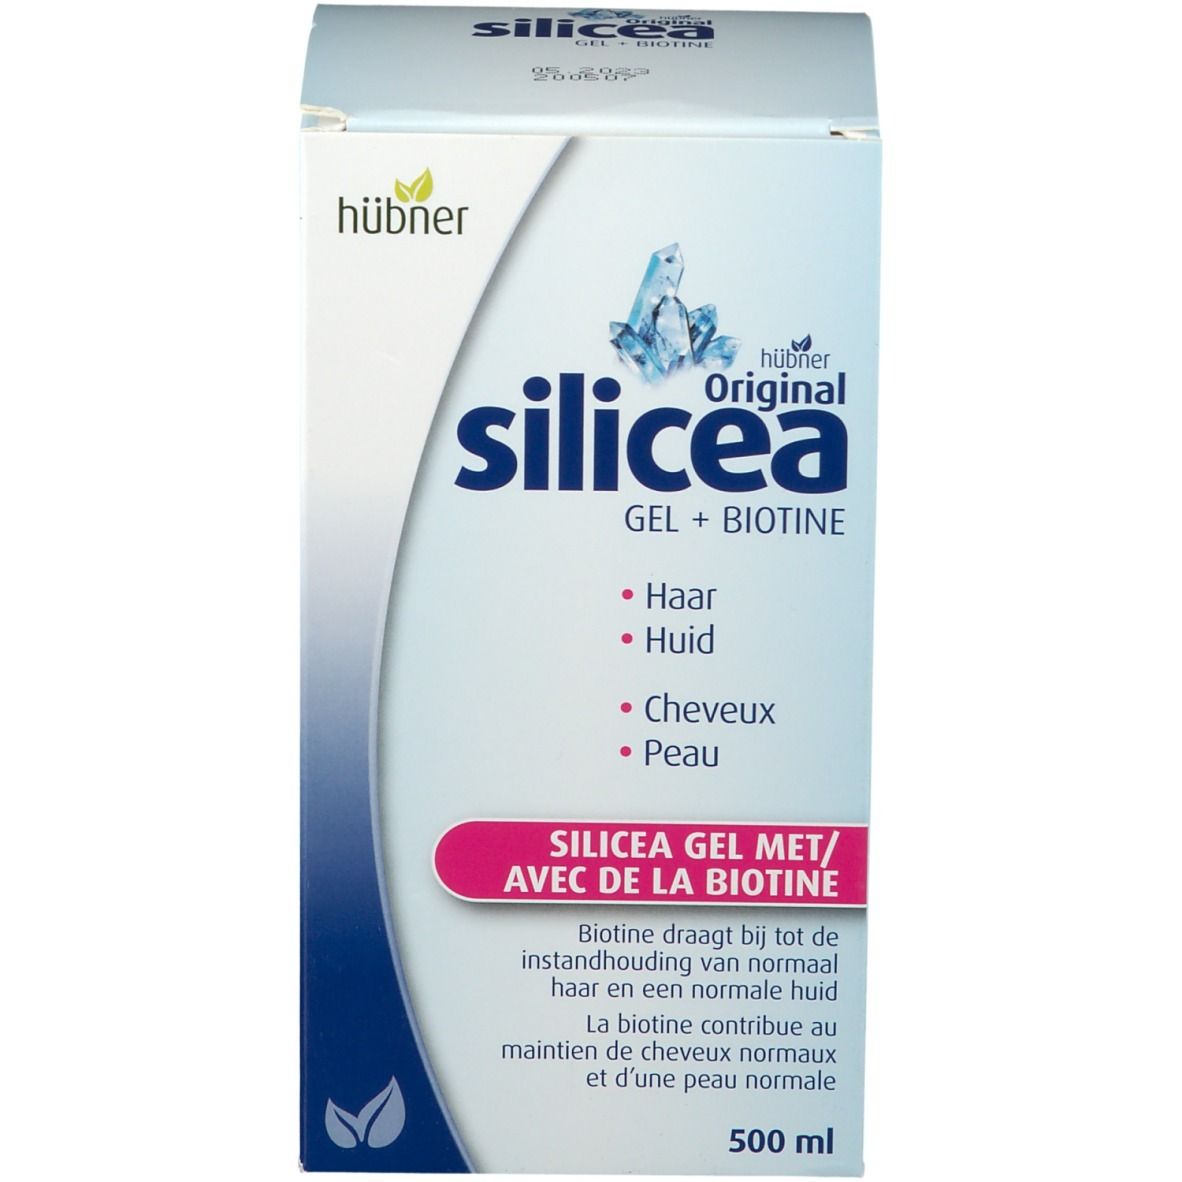 Hübner Original silicea® Gel + Biotine